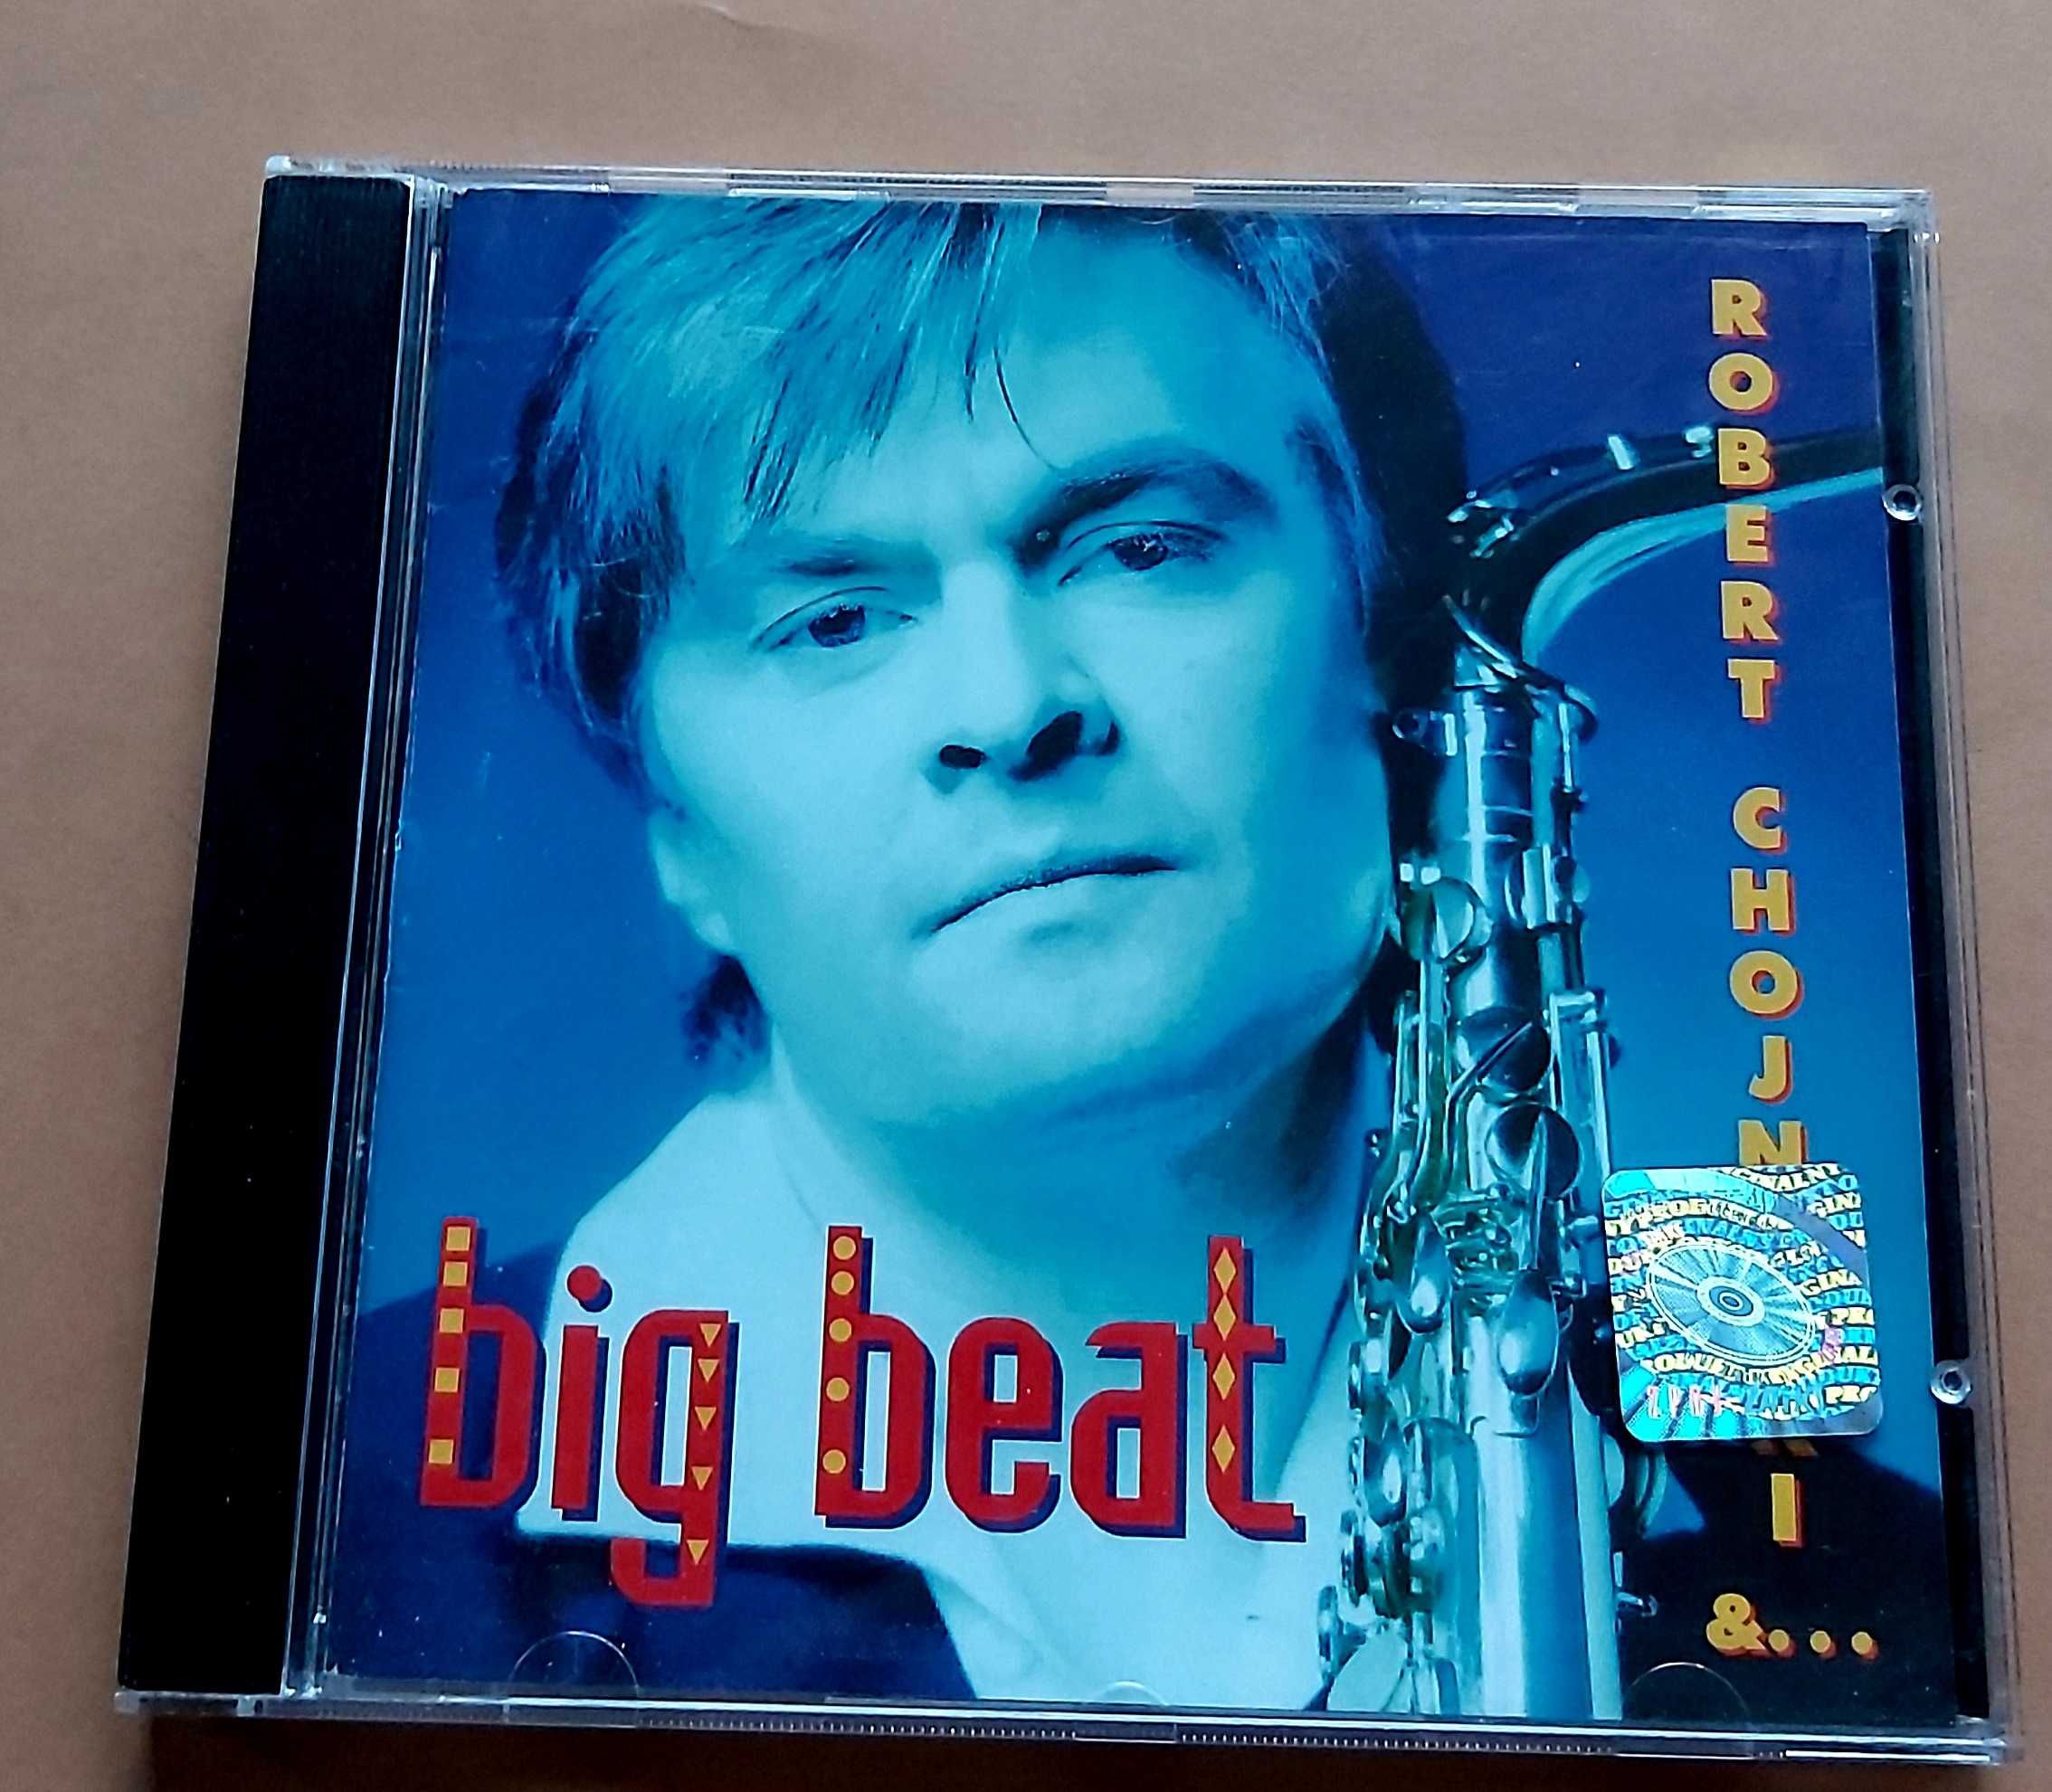 CD Robert Chojnacki /Big beat